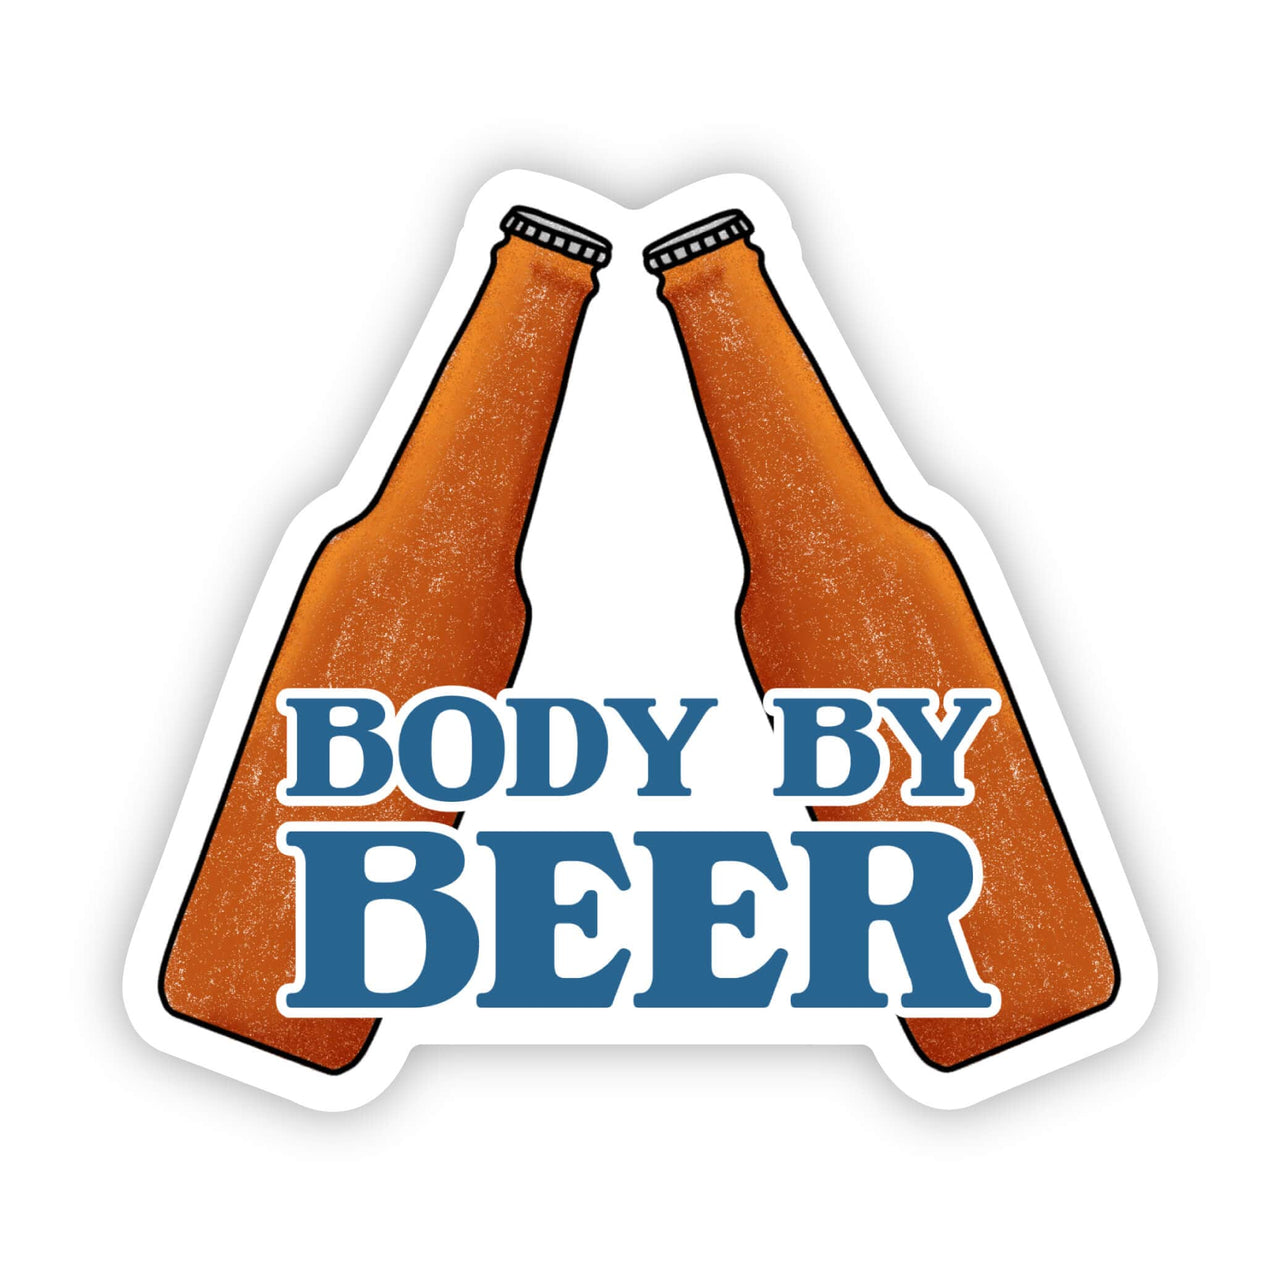 "Body by beer" sticker